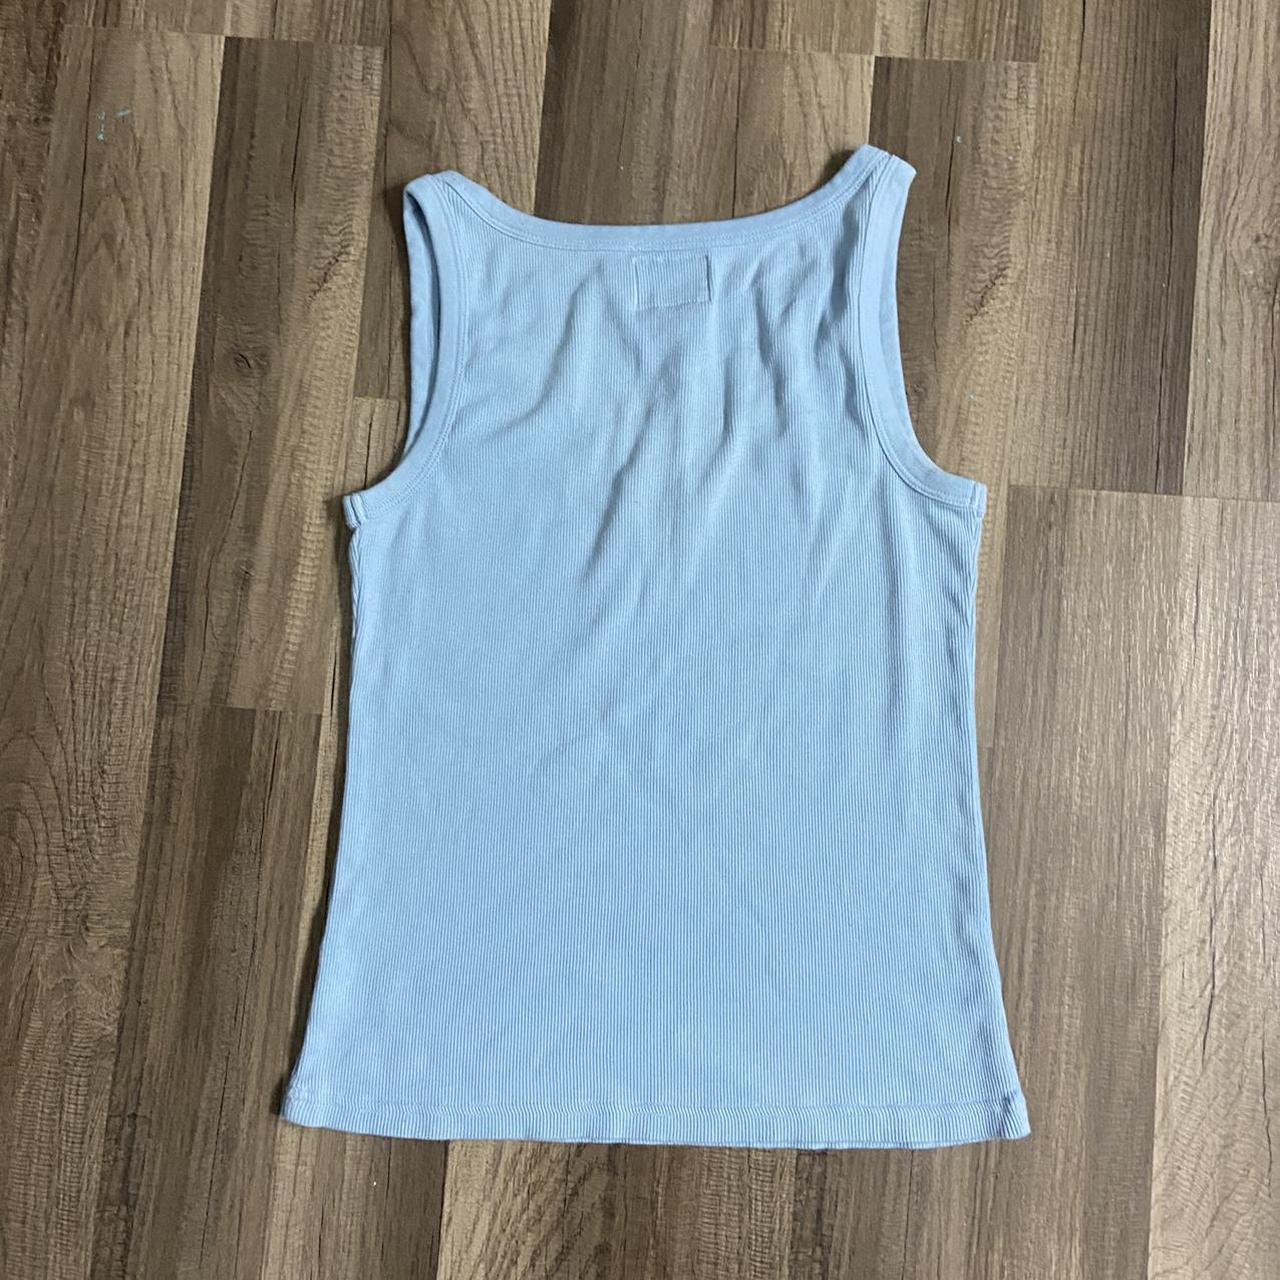 Women's Blue Vests-tanks-camis | Depop